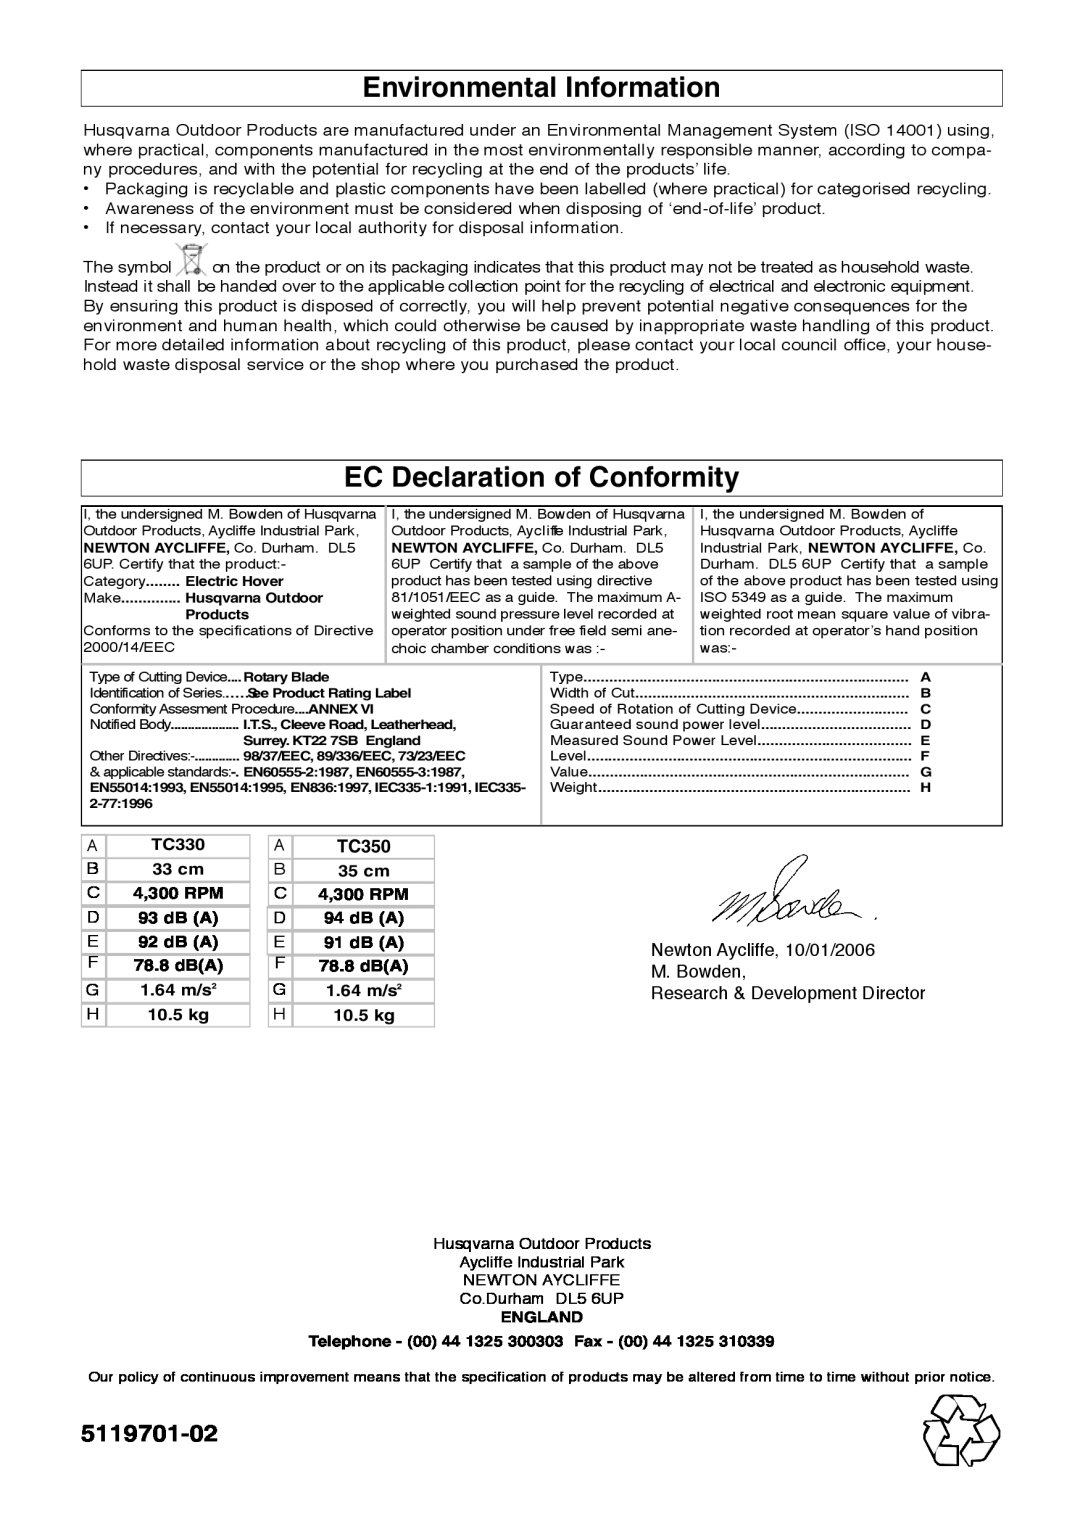 Flymo Turbo Compact manual Environmental Information, EC Declaration of Conformity, 5119701-02, TC350, M. Bowden 